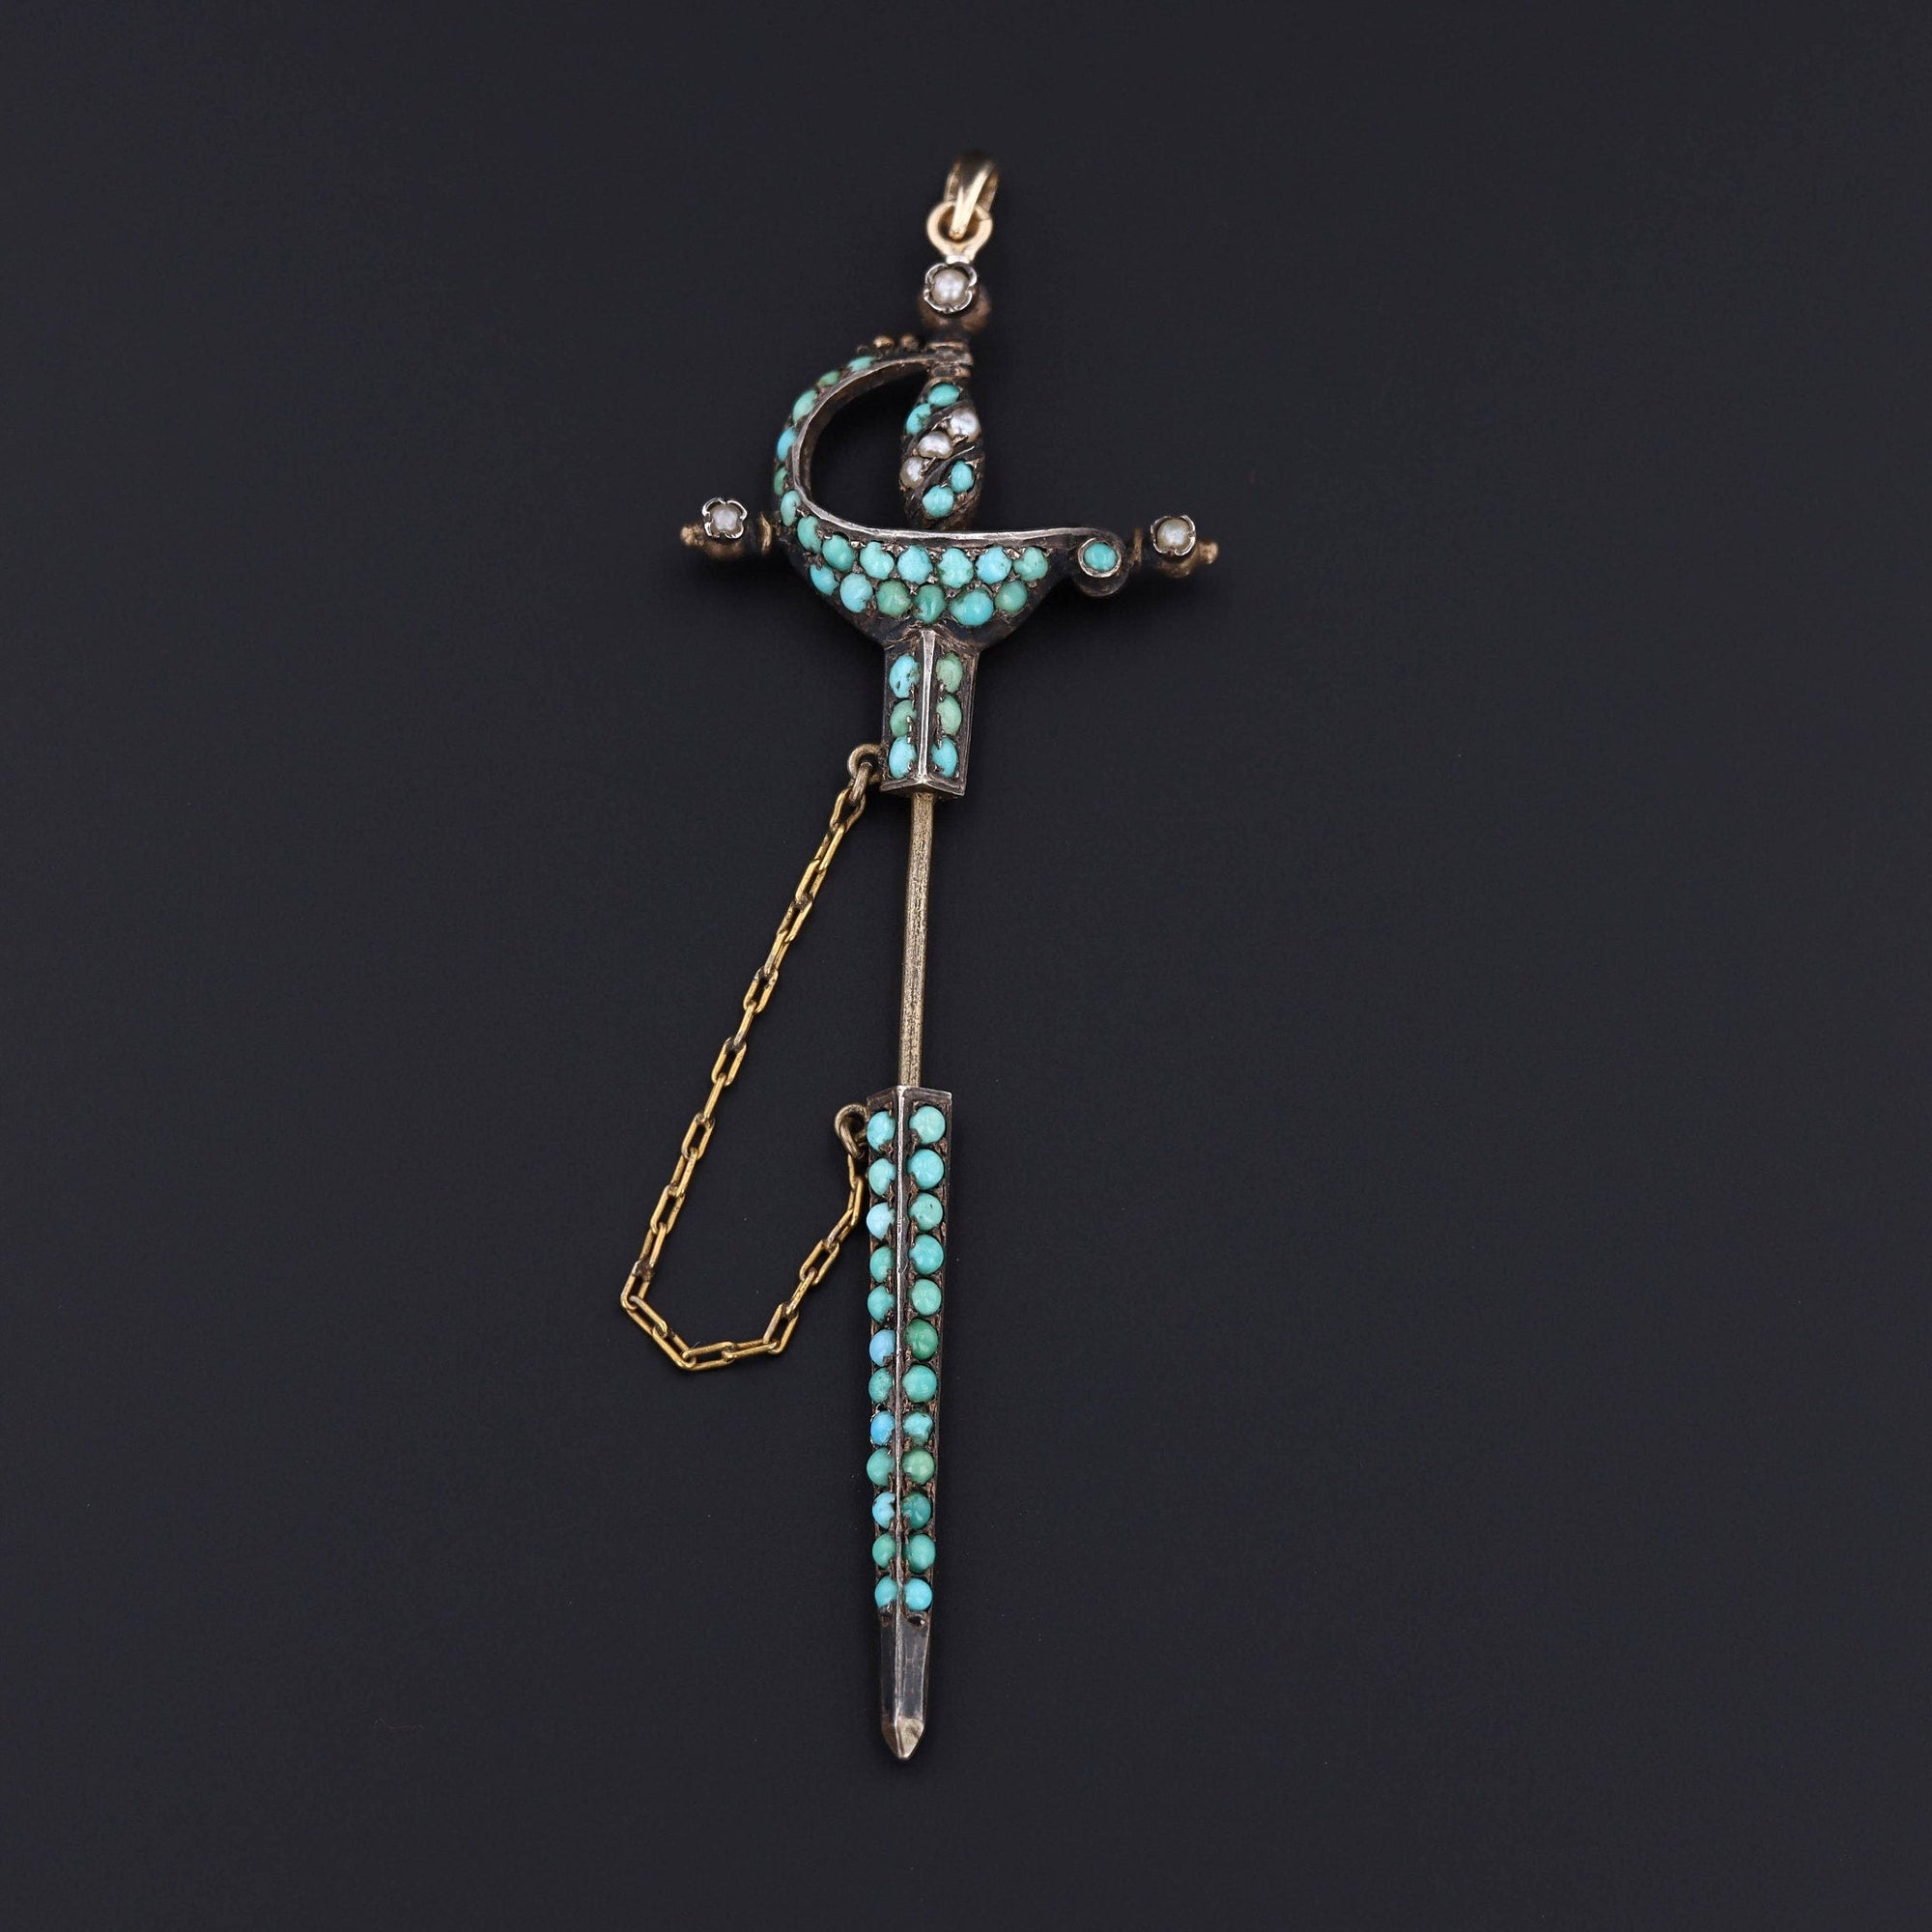 Antique Dagger or Sword in Sheathe Pendant | Silver & Turquoise Pendant 